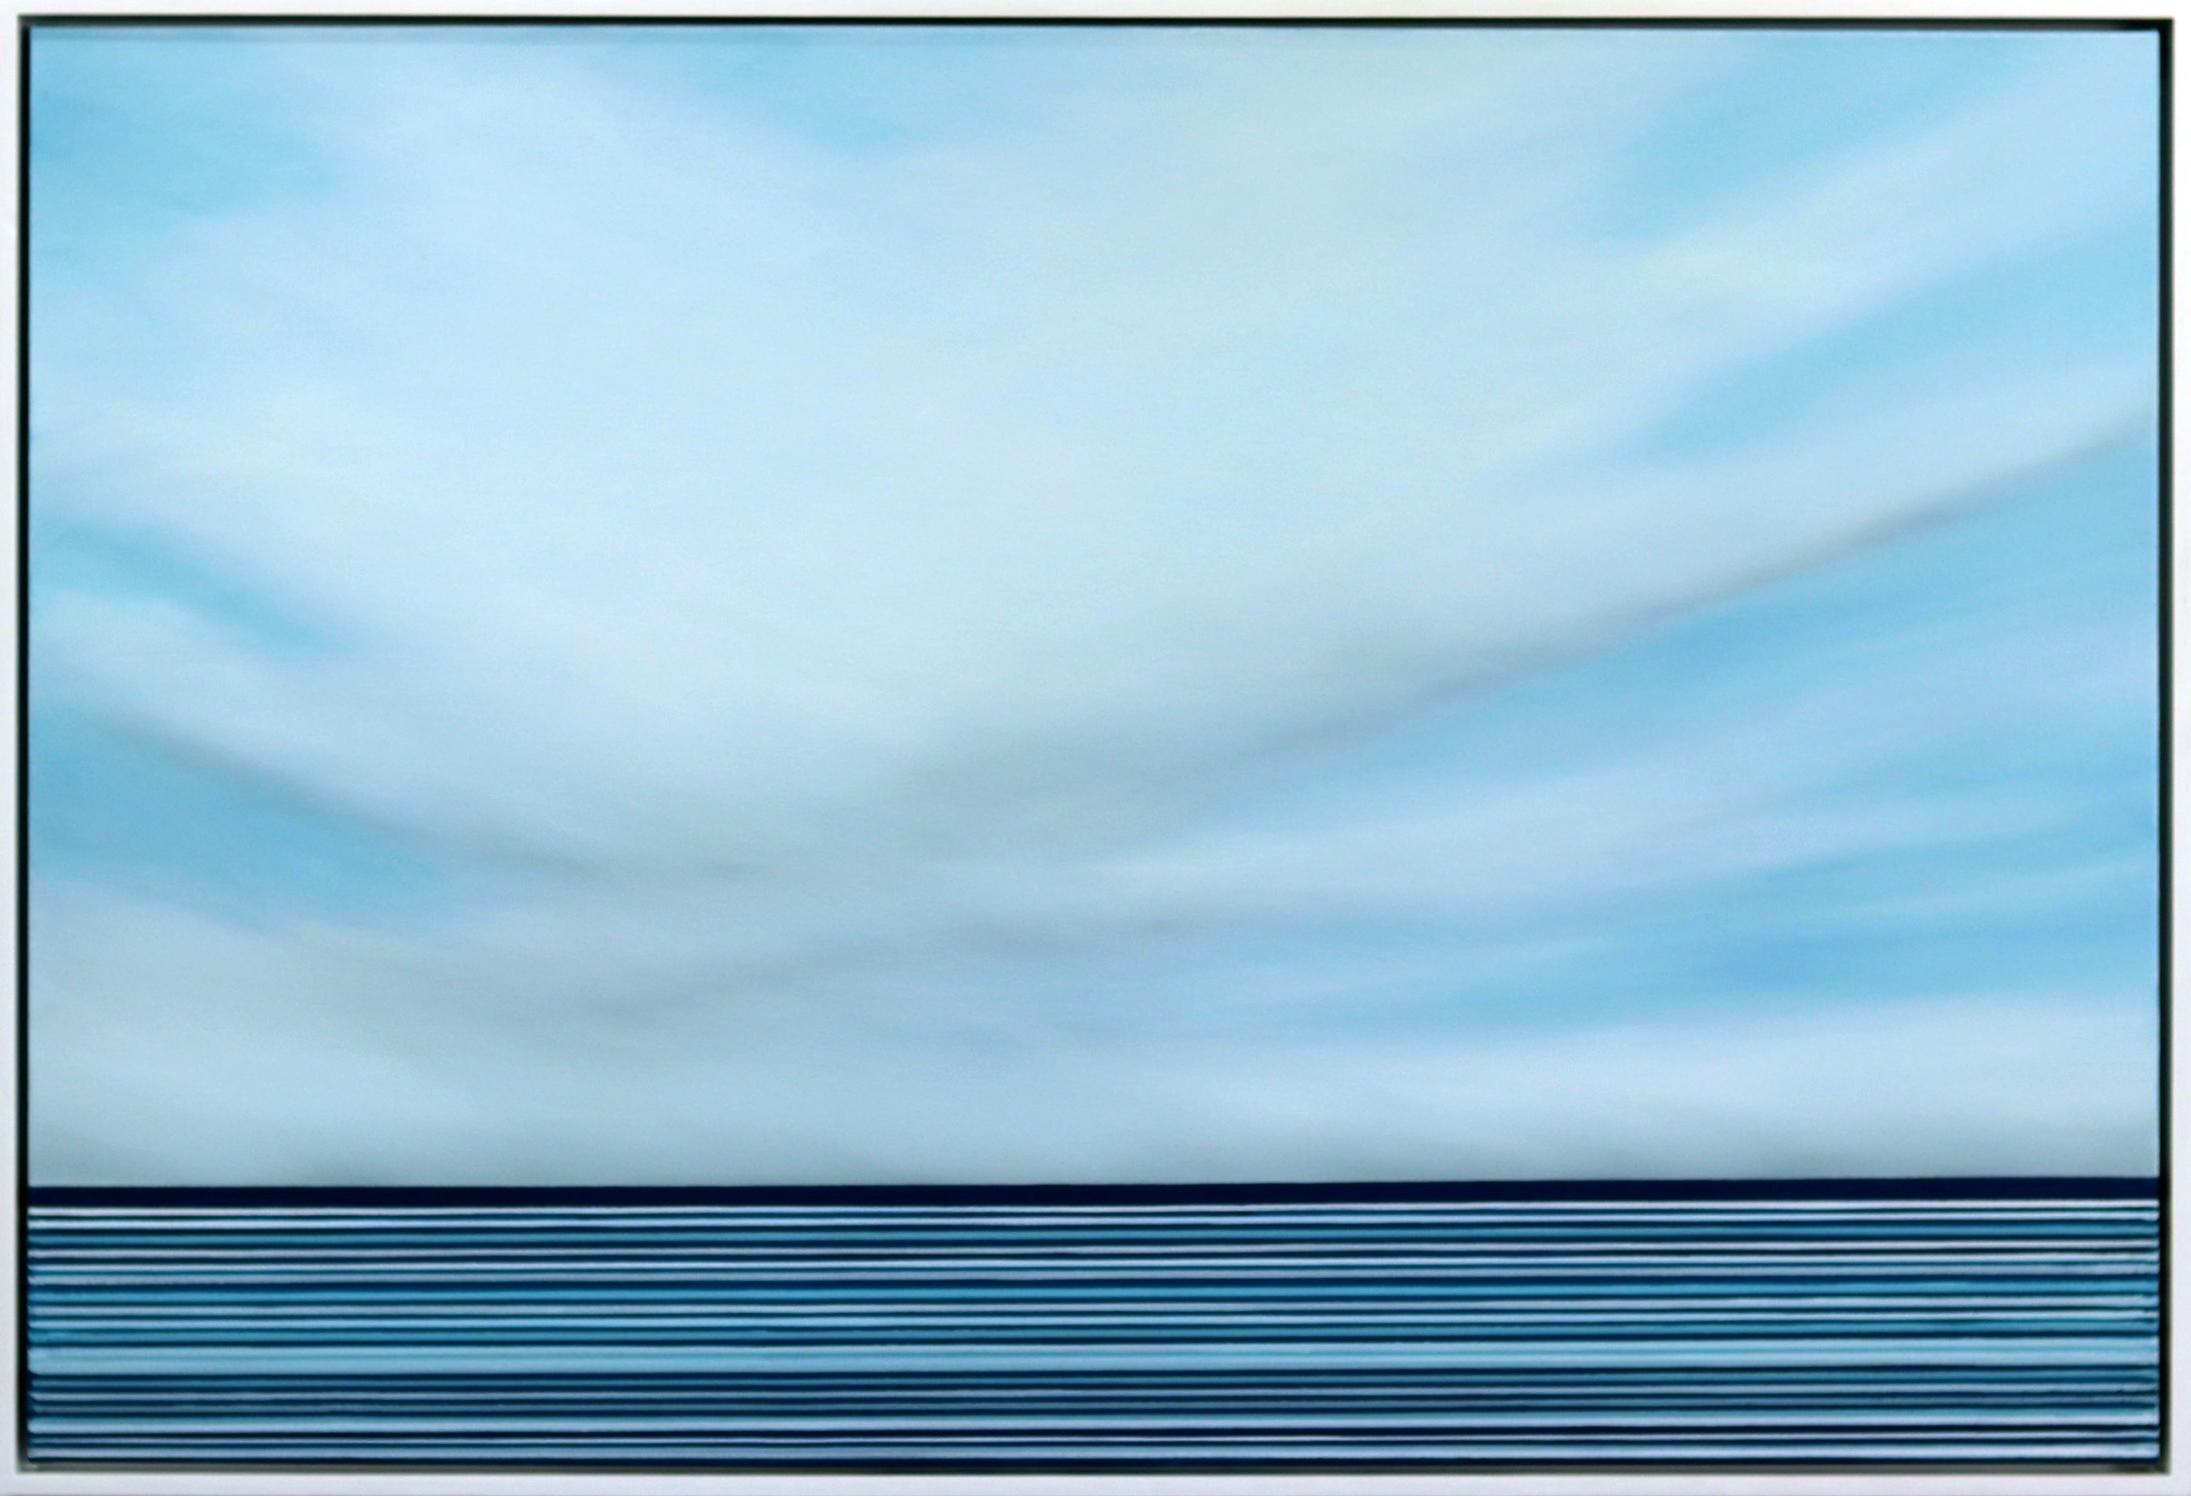 Untitled No. 762 - Framed Contemporary Minimalist Blue Landscape Ocean Artwork - Mixed Media Art by Jeremy  Prim